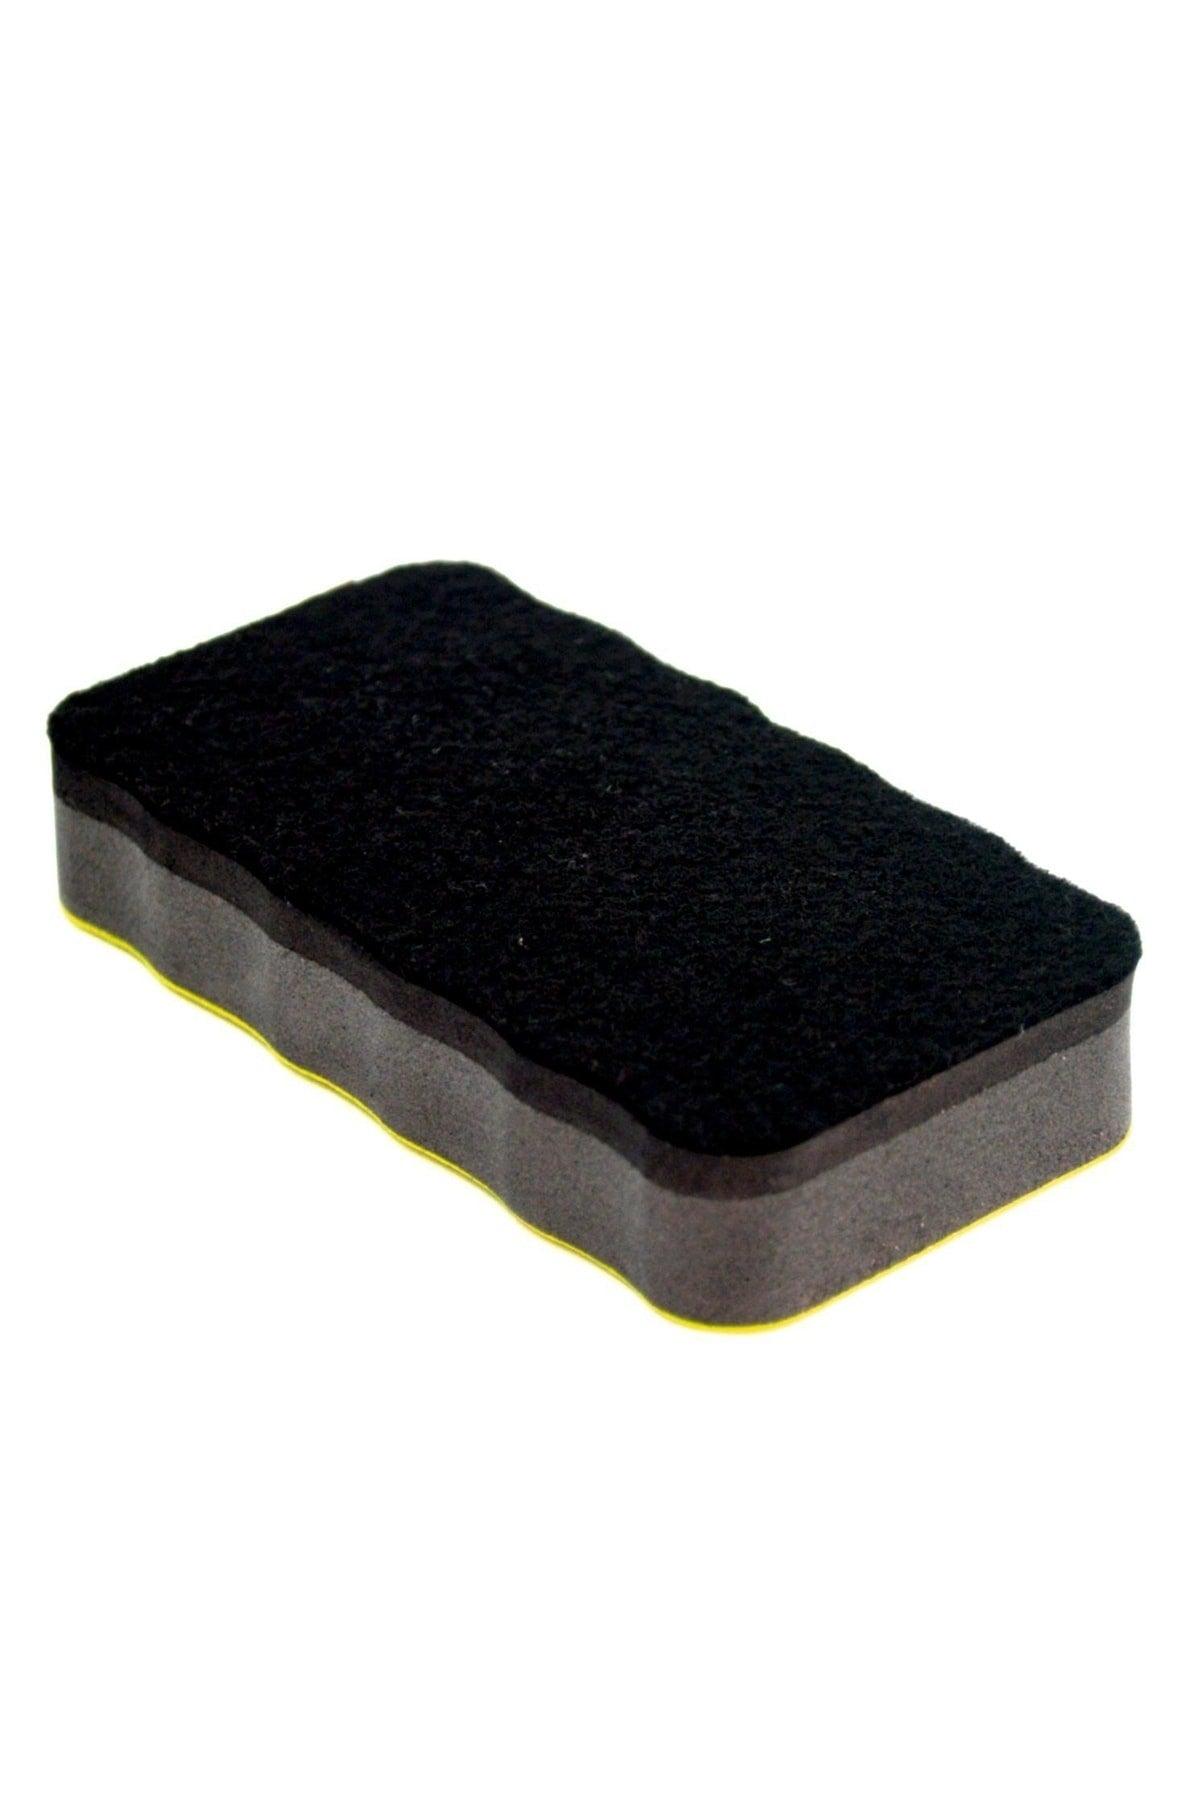 Magnetic Blackboard Eraser 1 Piece Yellow